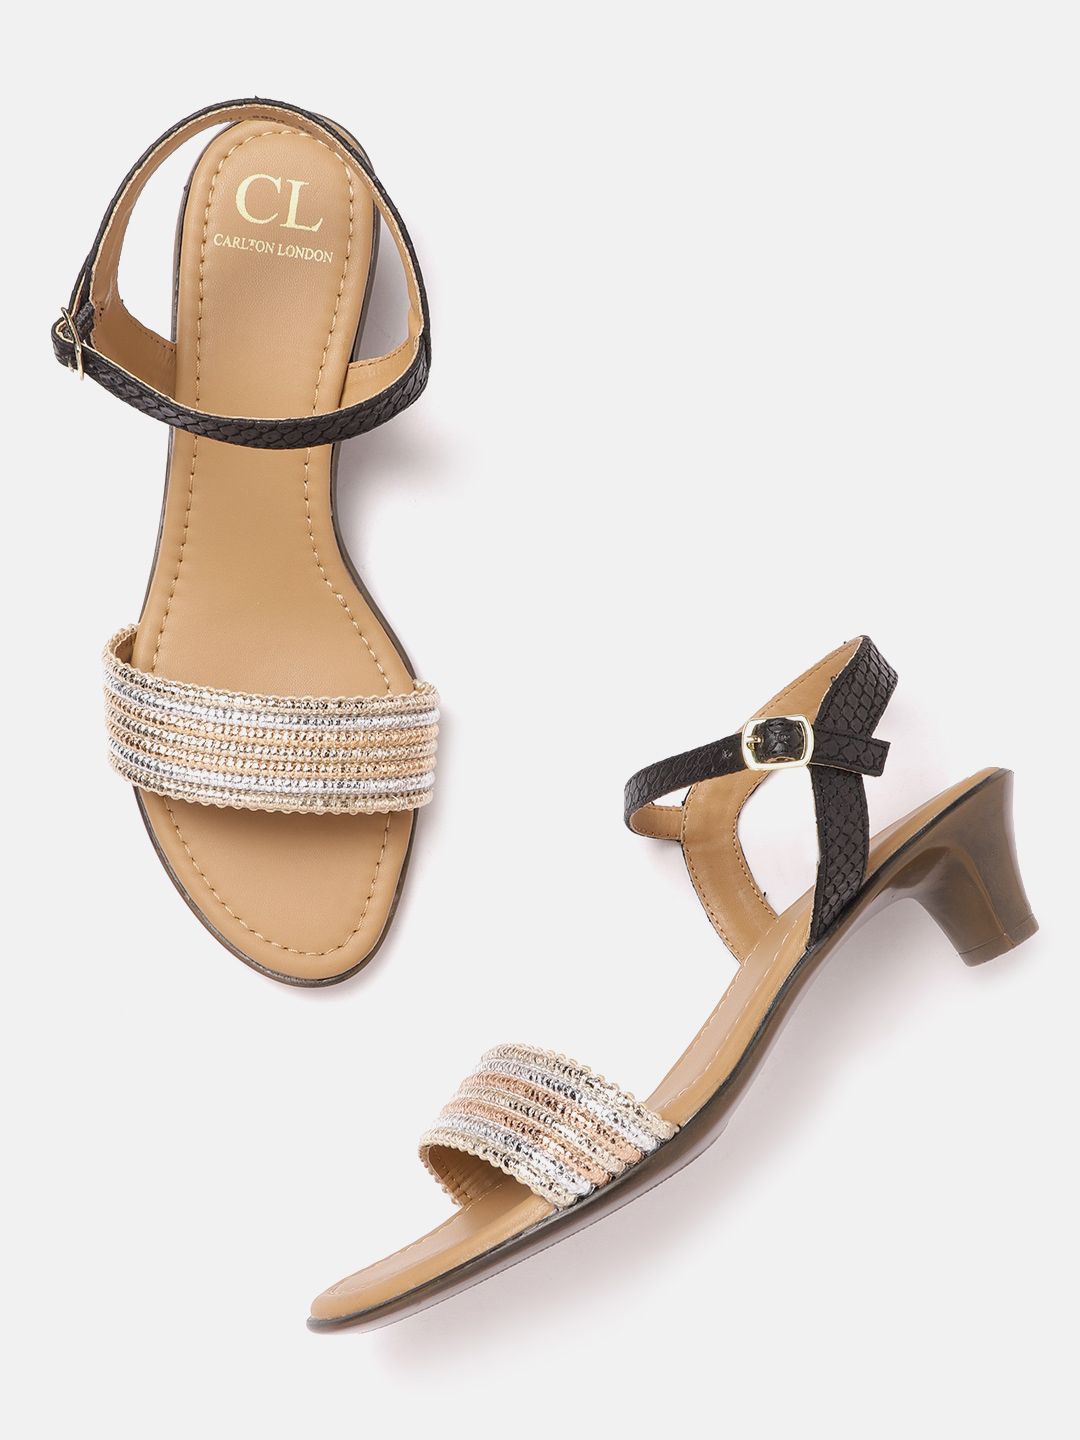 Carlton London Women Gold-Toned & Silver-Toned Striped Block Heels Price in India